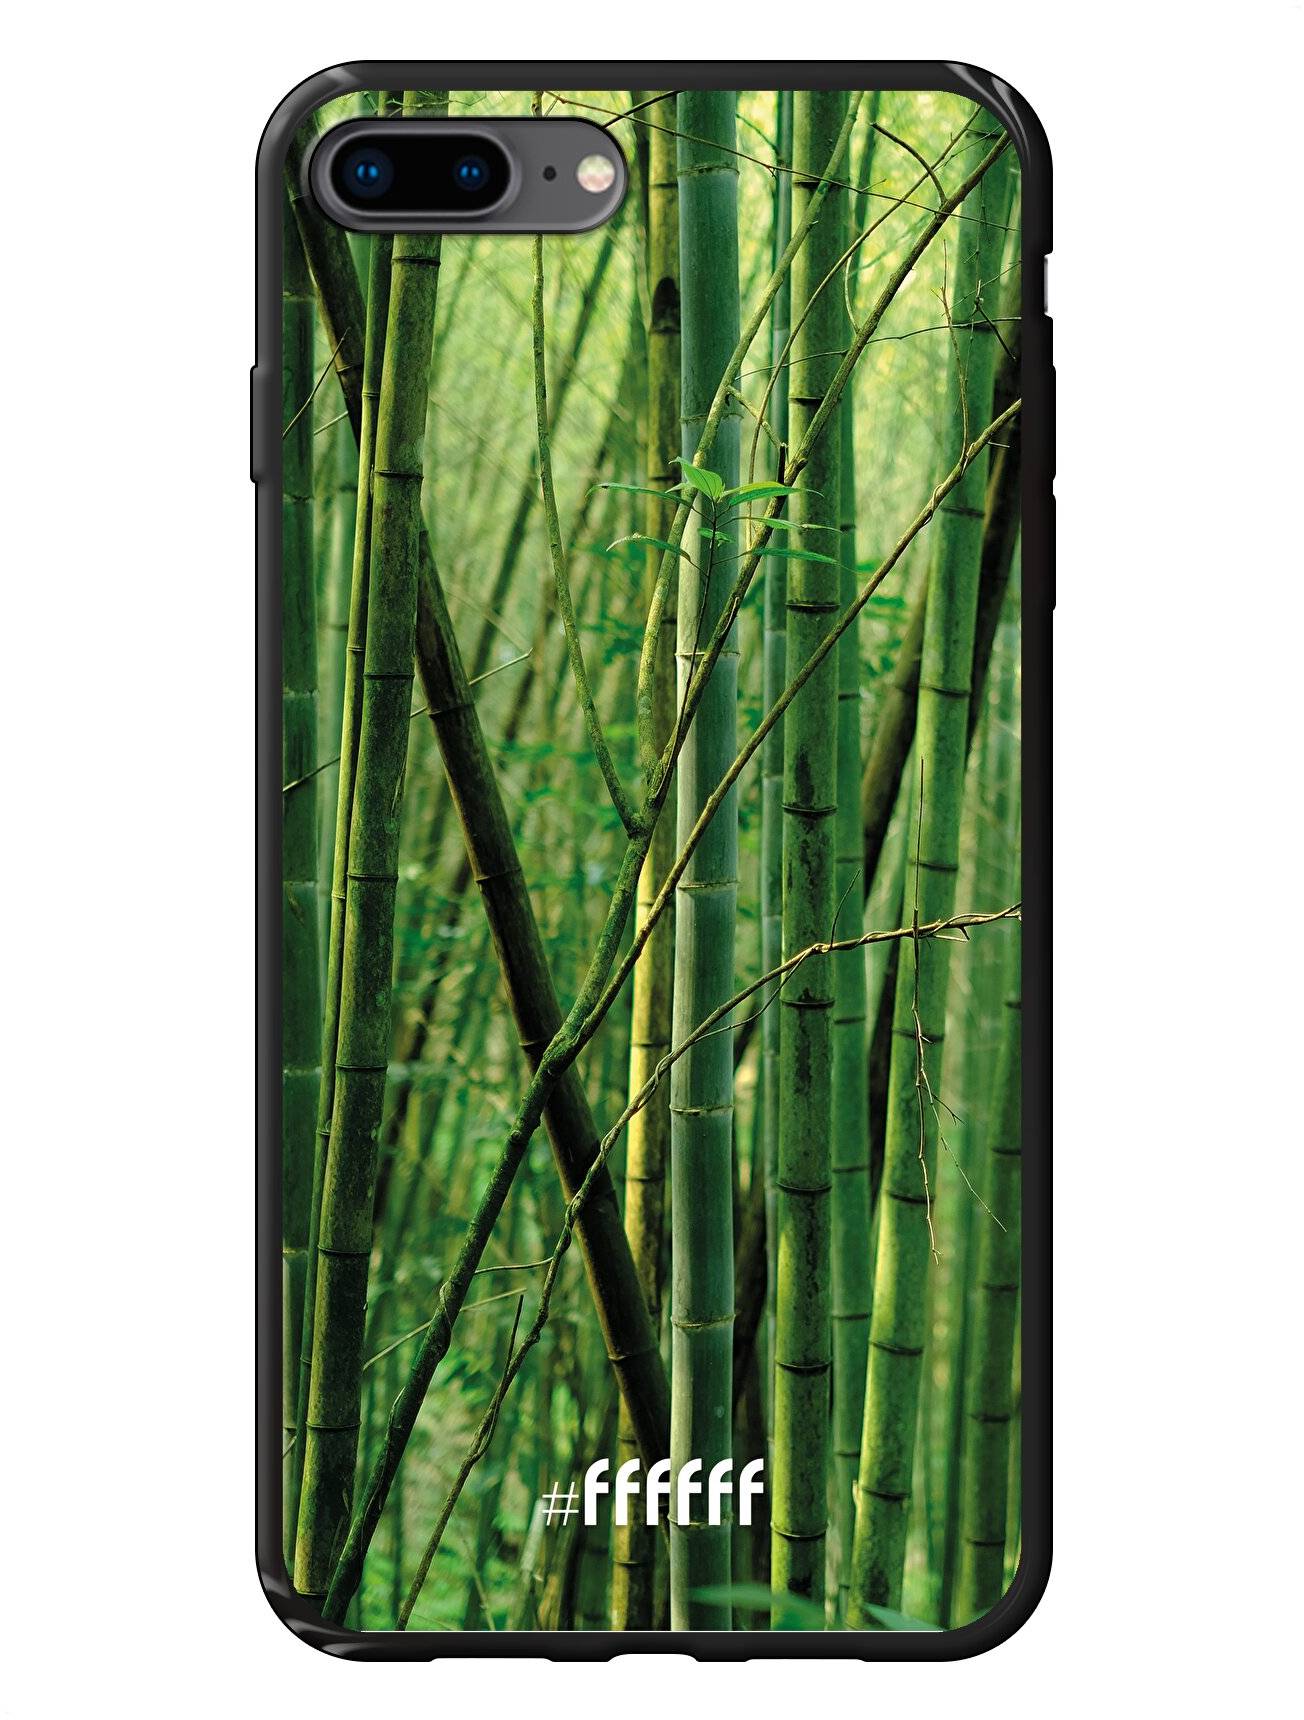 Bamboo iPhone 7 Plus